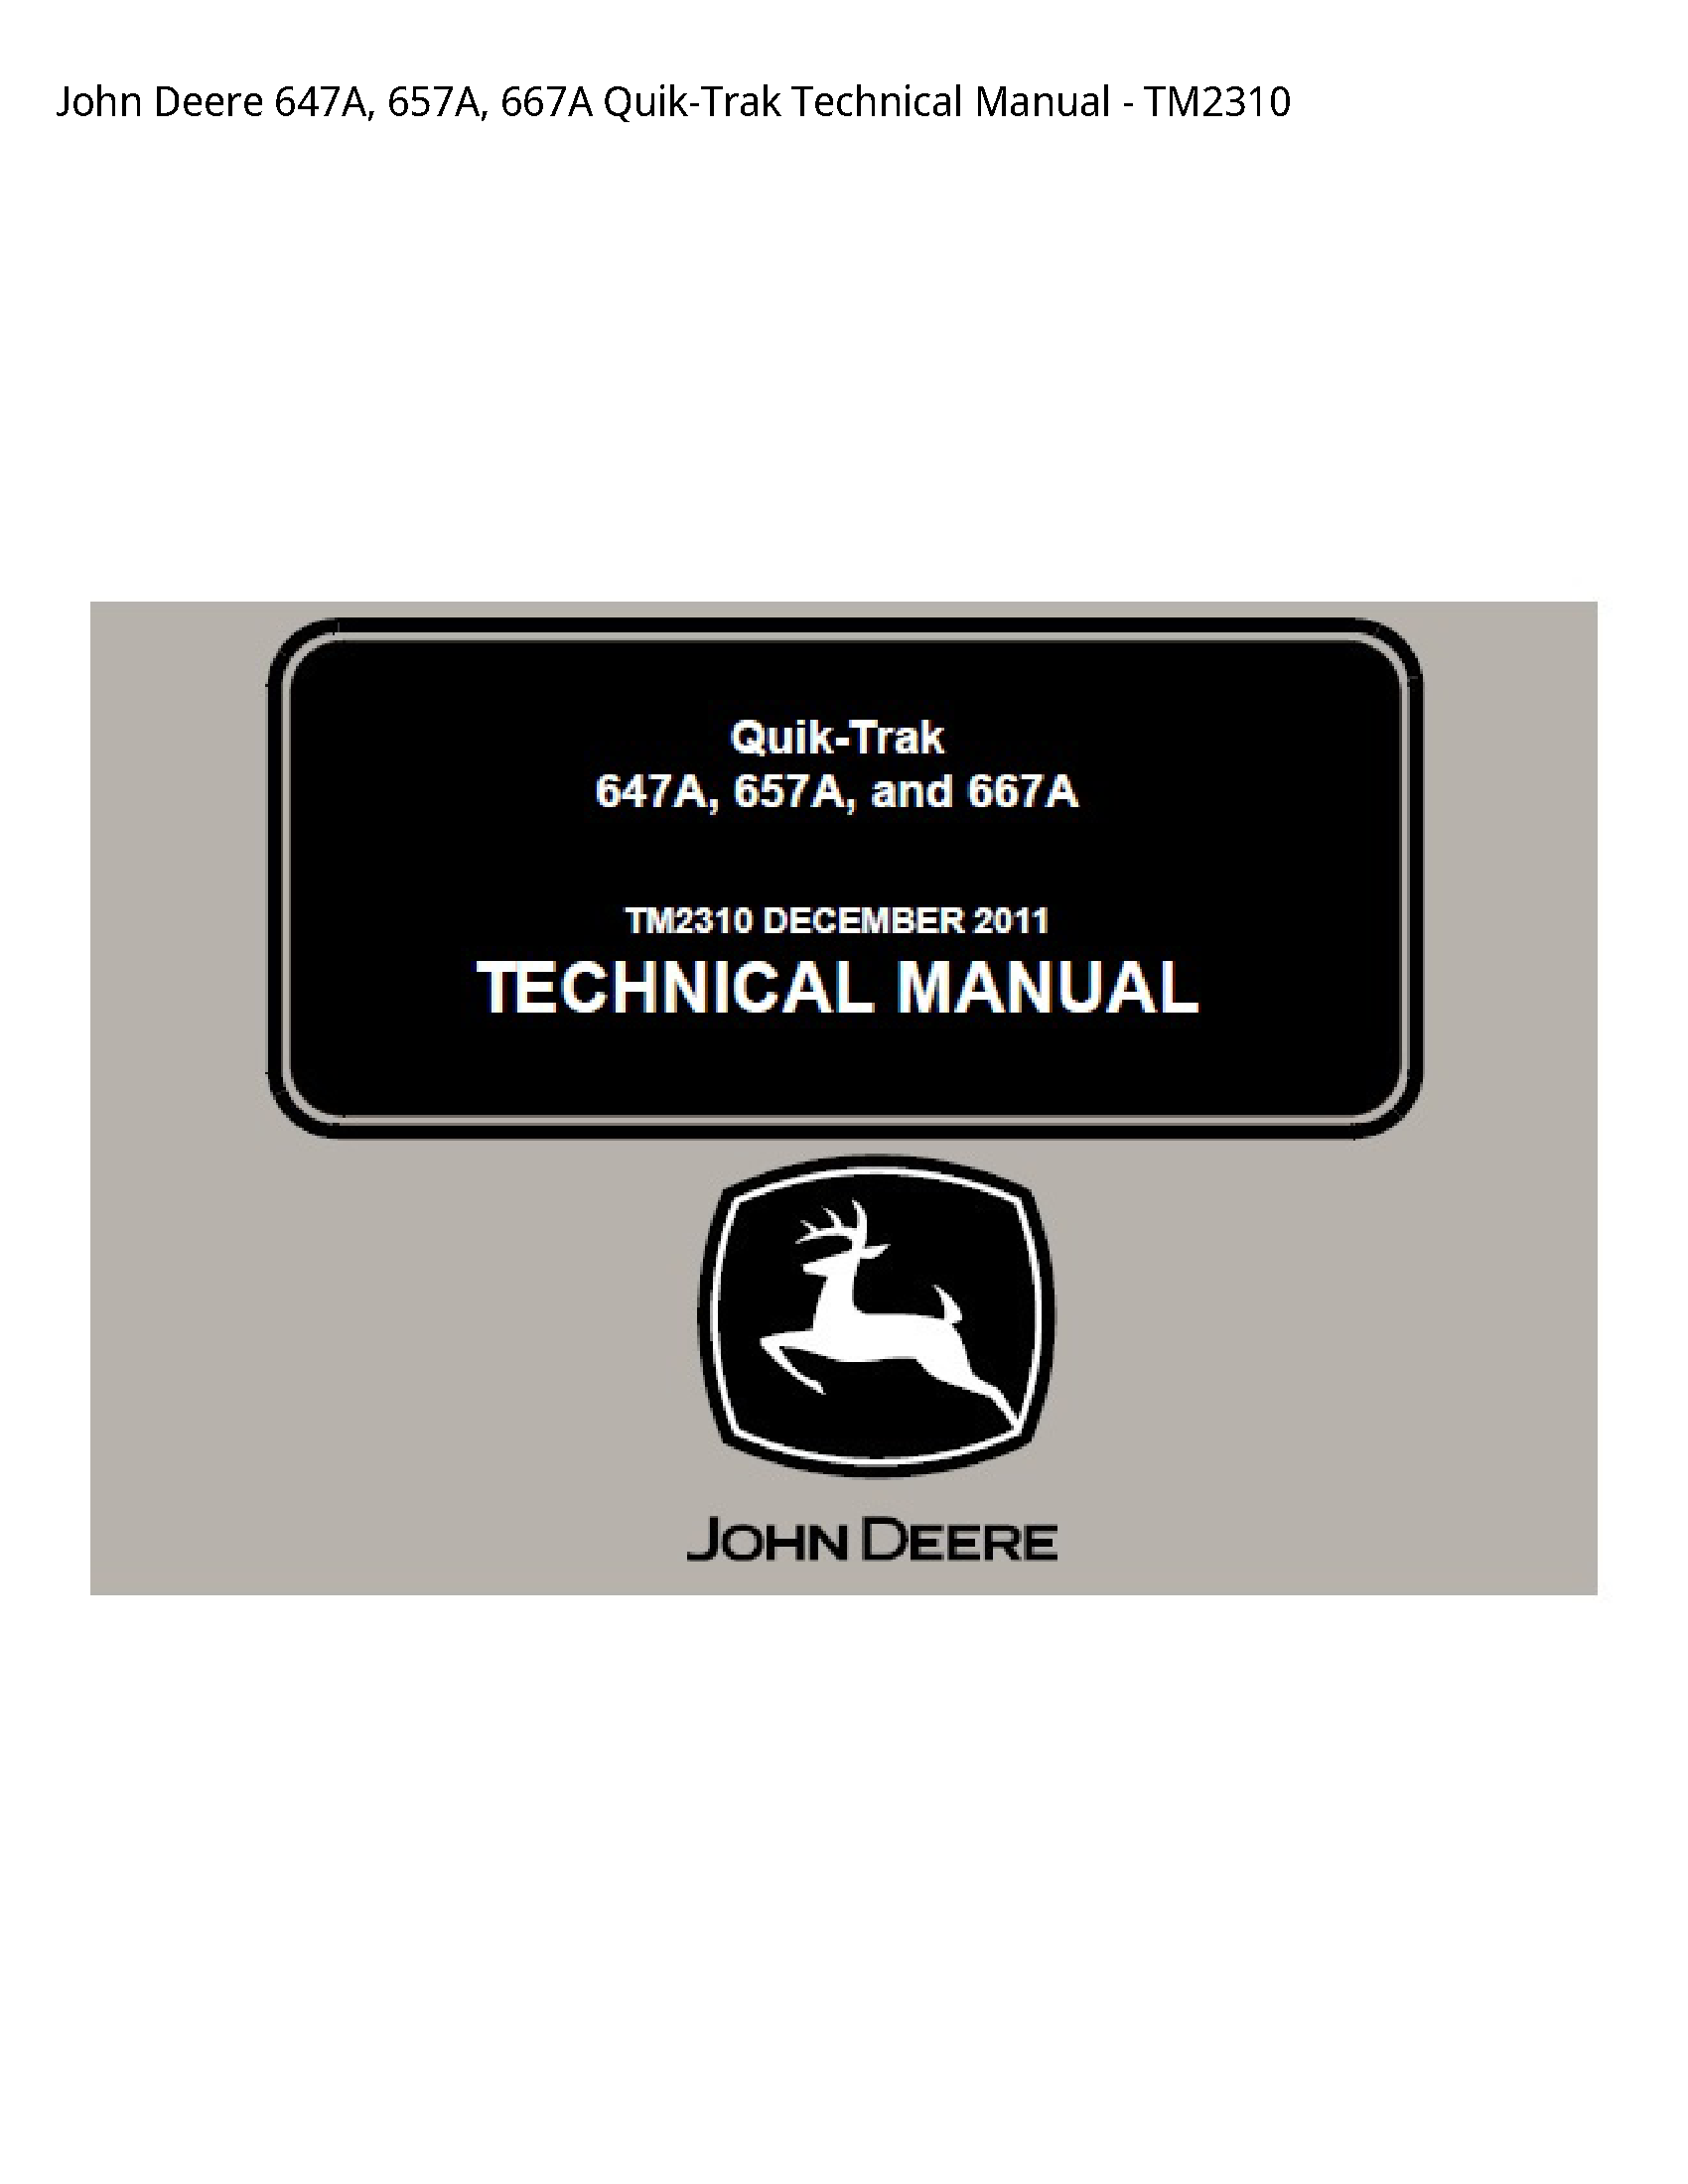 John Deere 647A Quik-Trak Technical manual